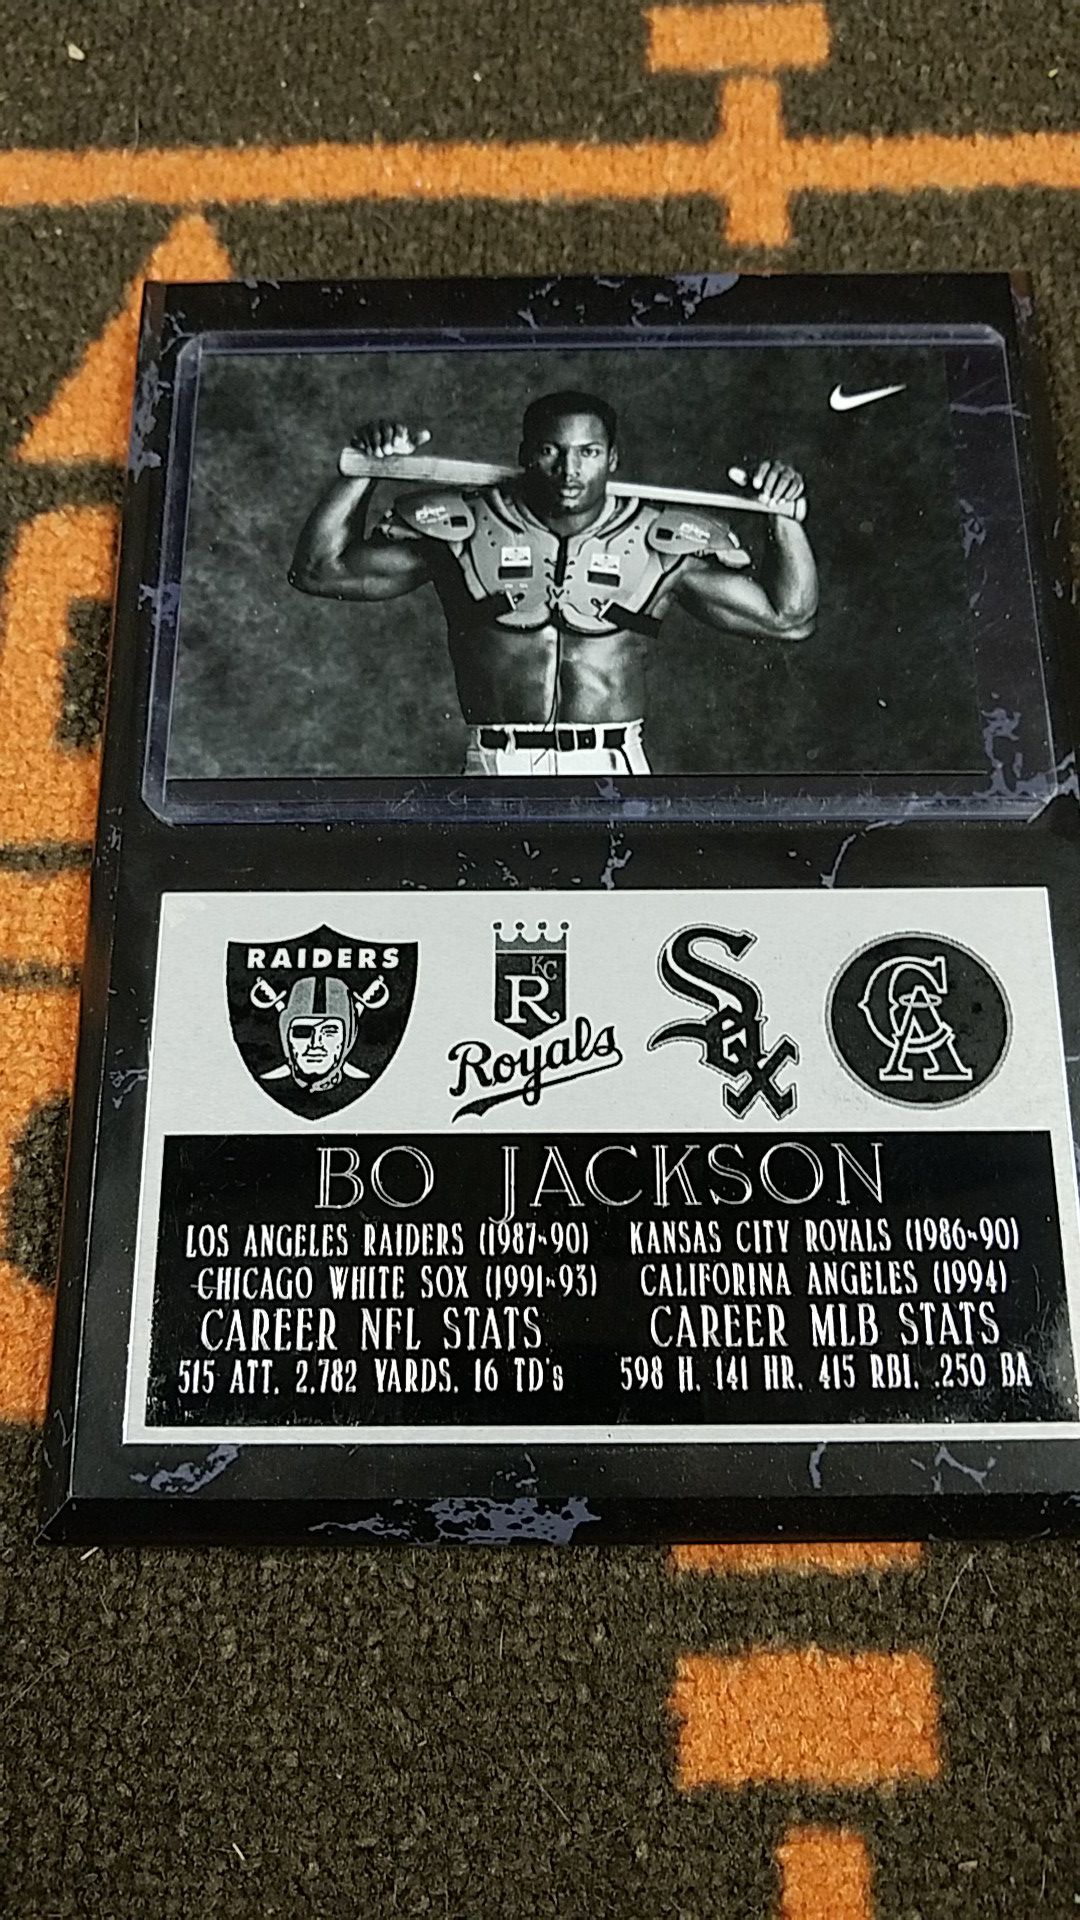 Bo jackson plaque